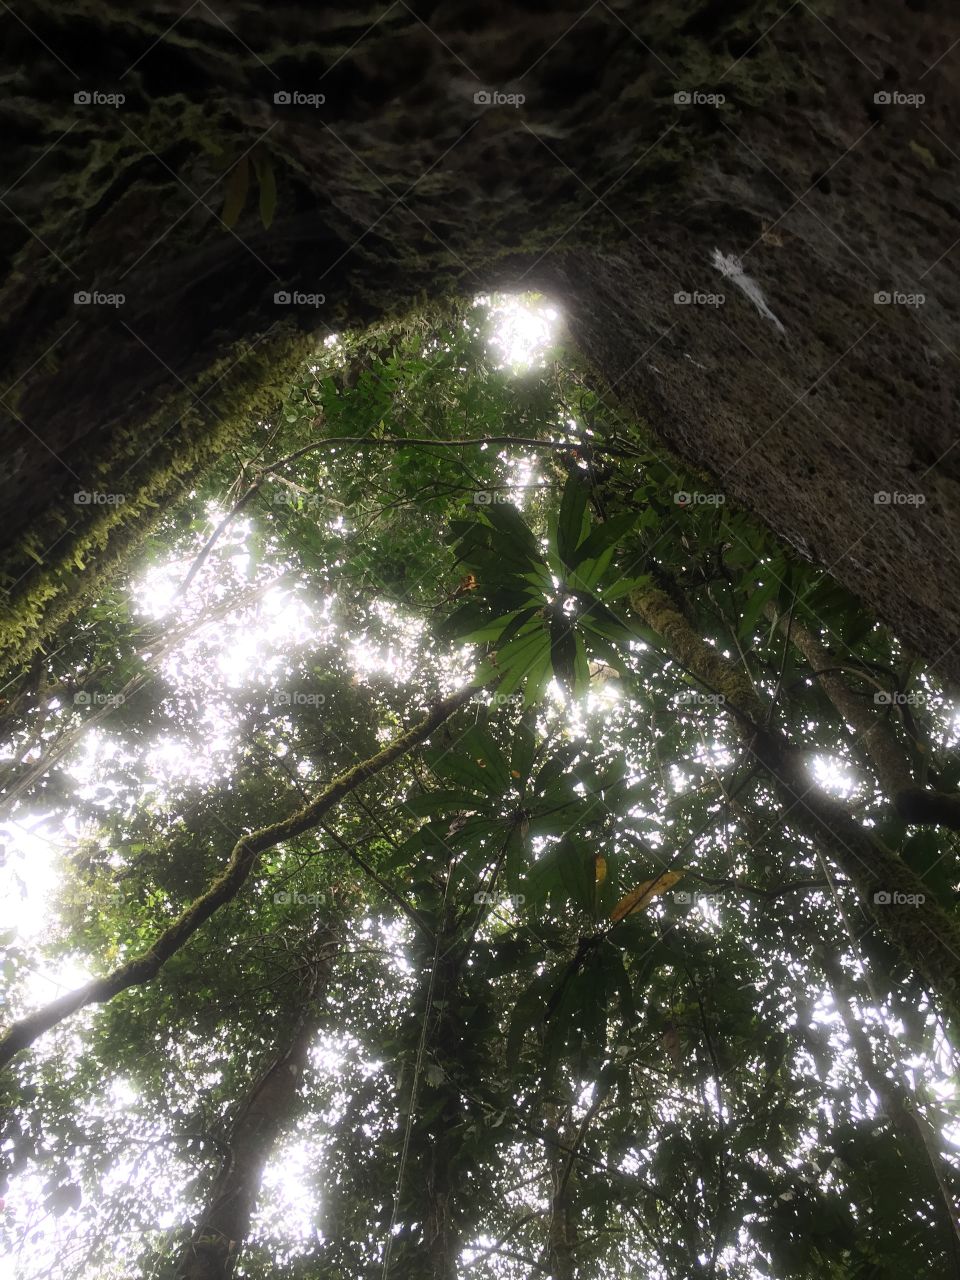 Light through trees looking up Amazon rainforest 